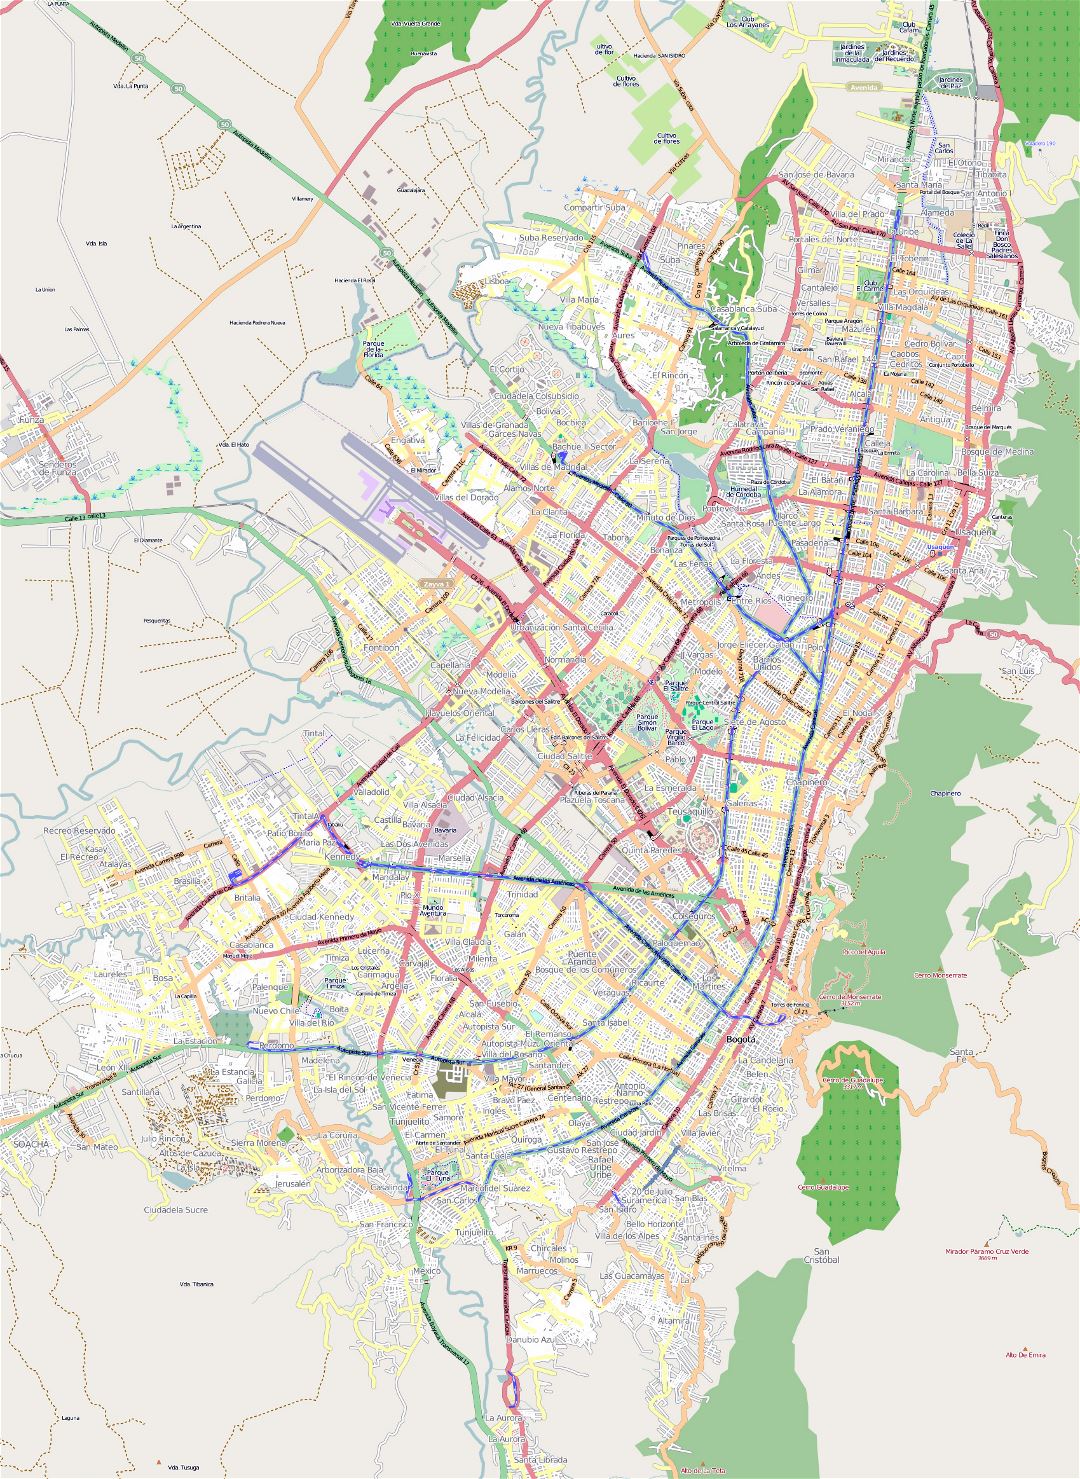 Detailed road map of Bogota city